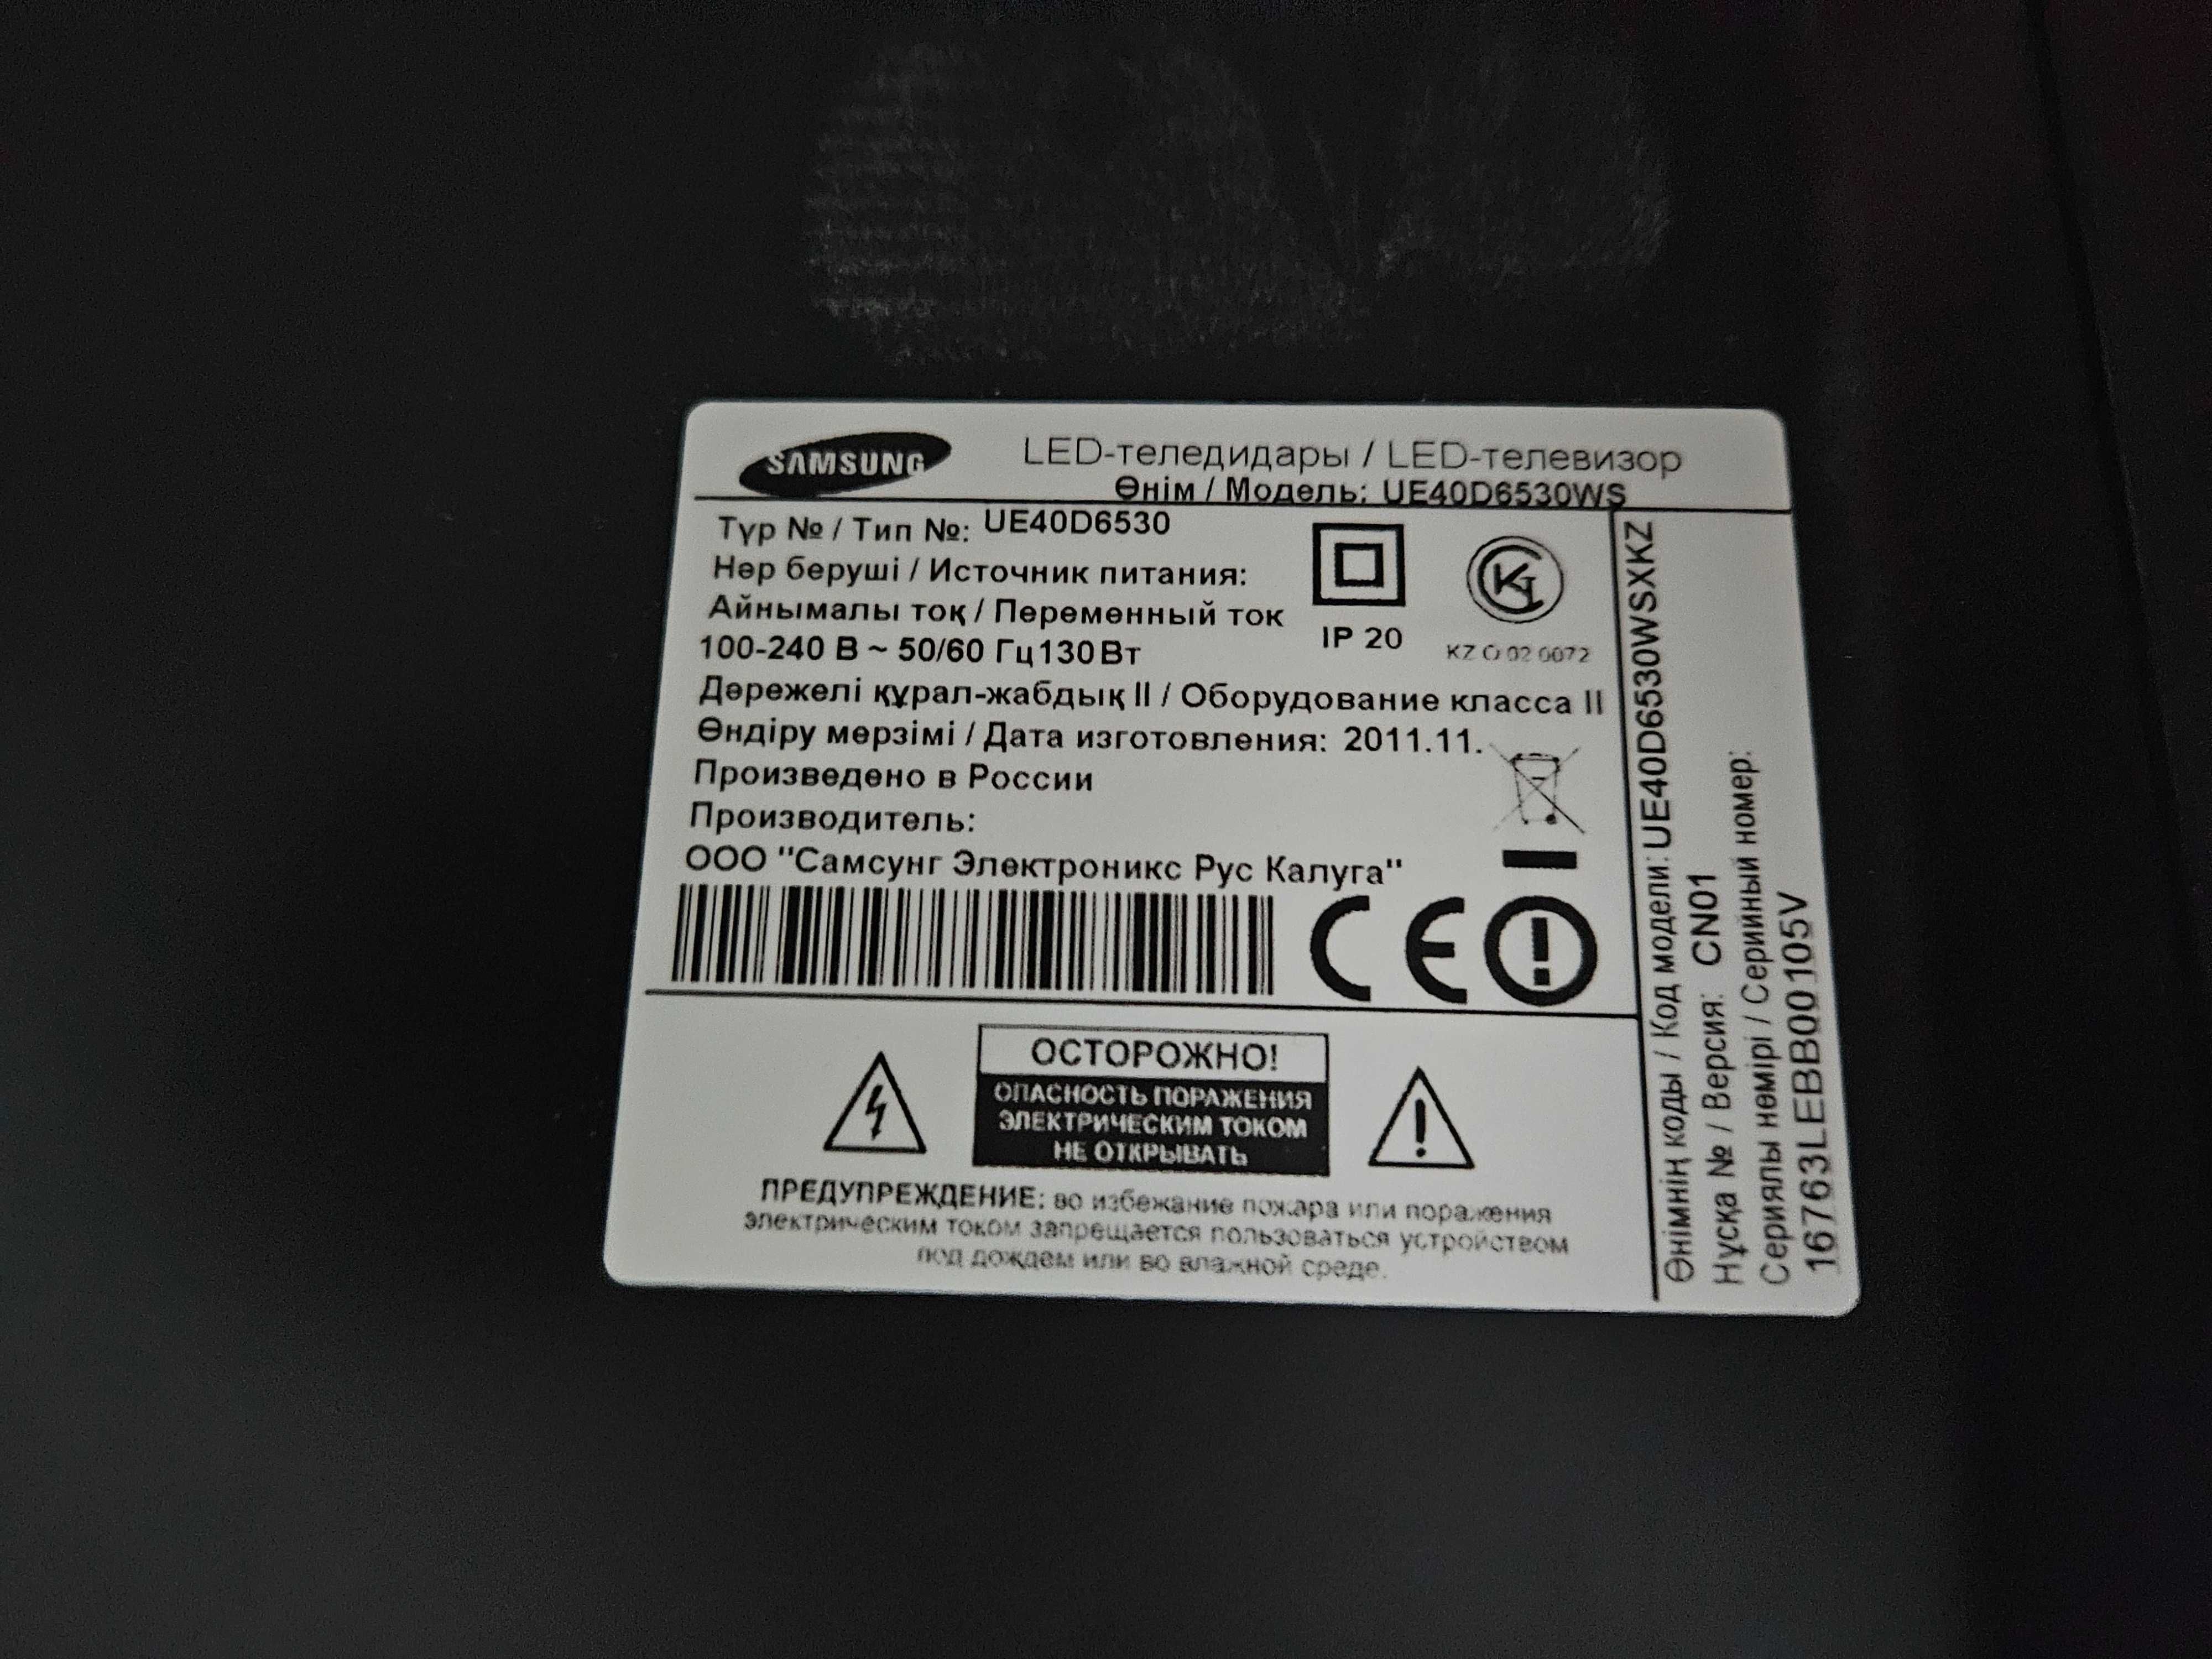 LED Телевизор Samsung UE40D6530WS, Диагональ 101.6 см